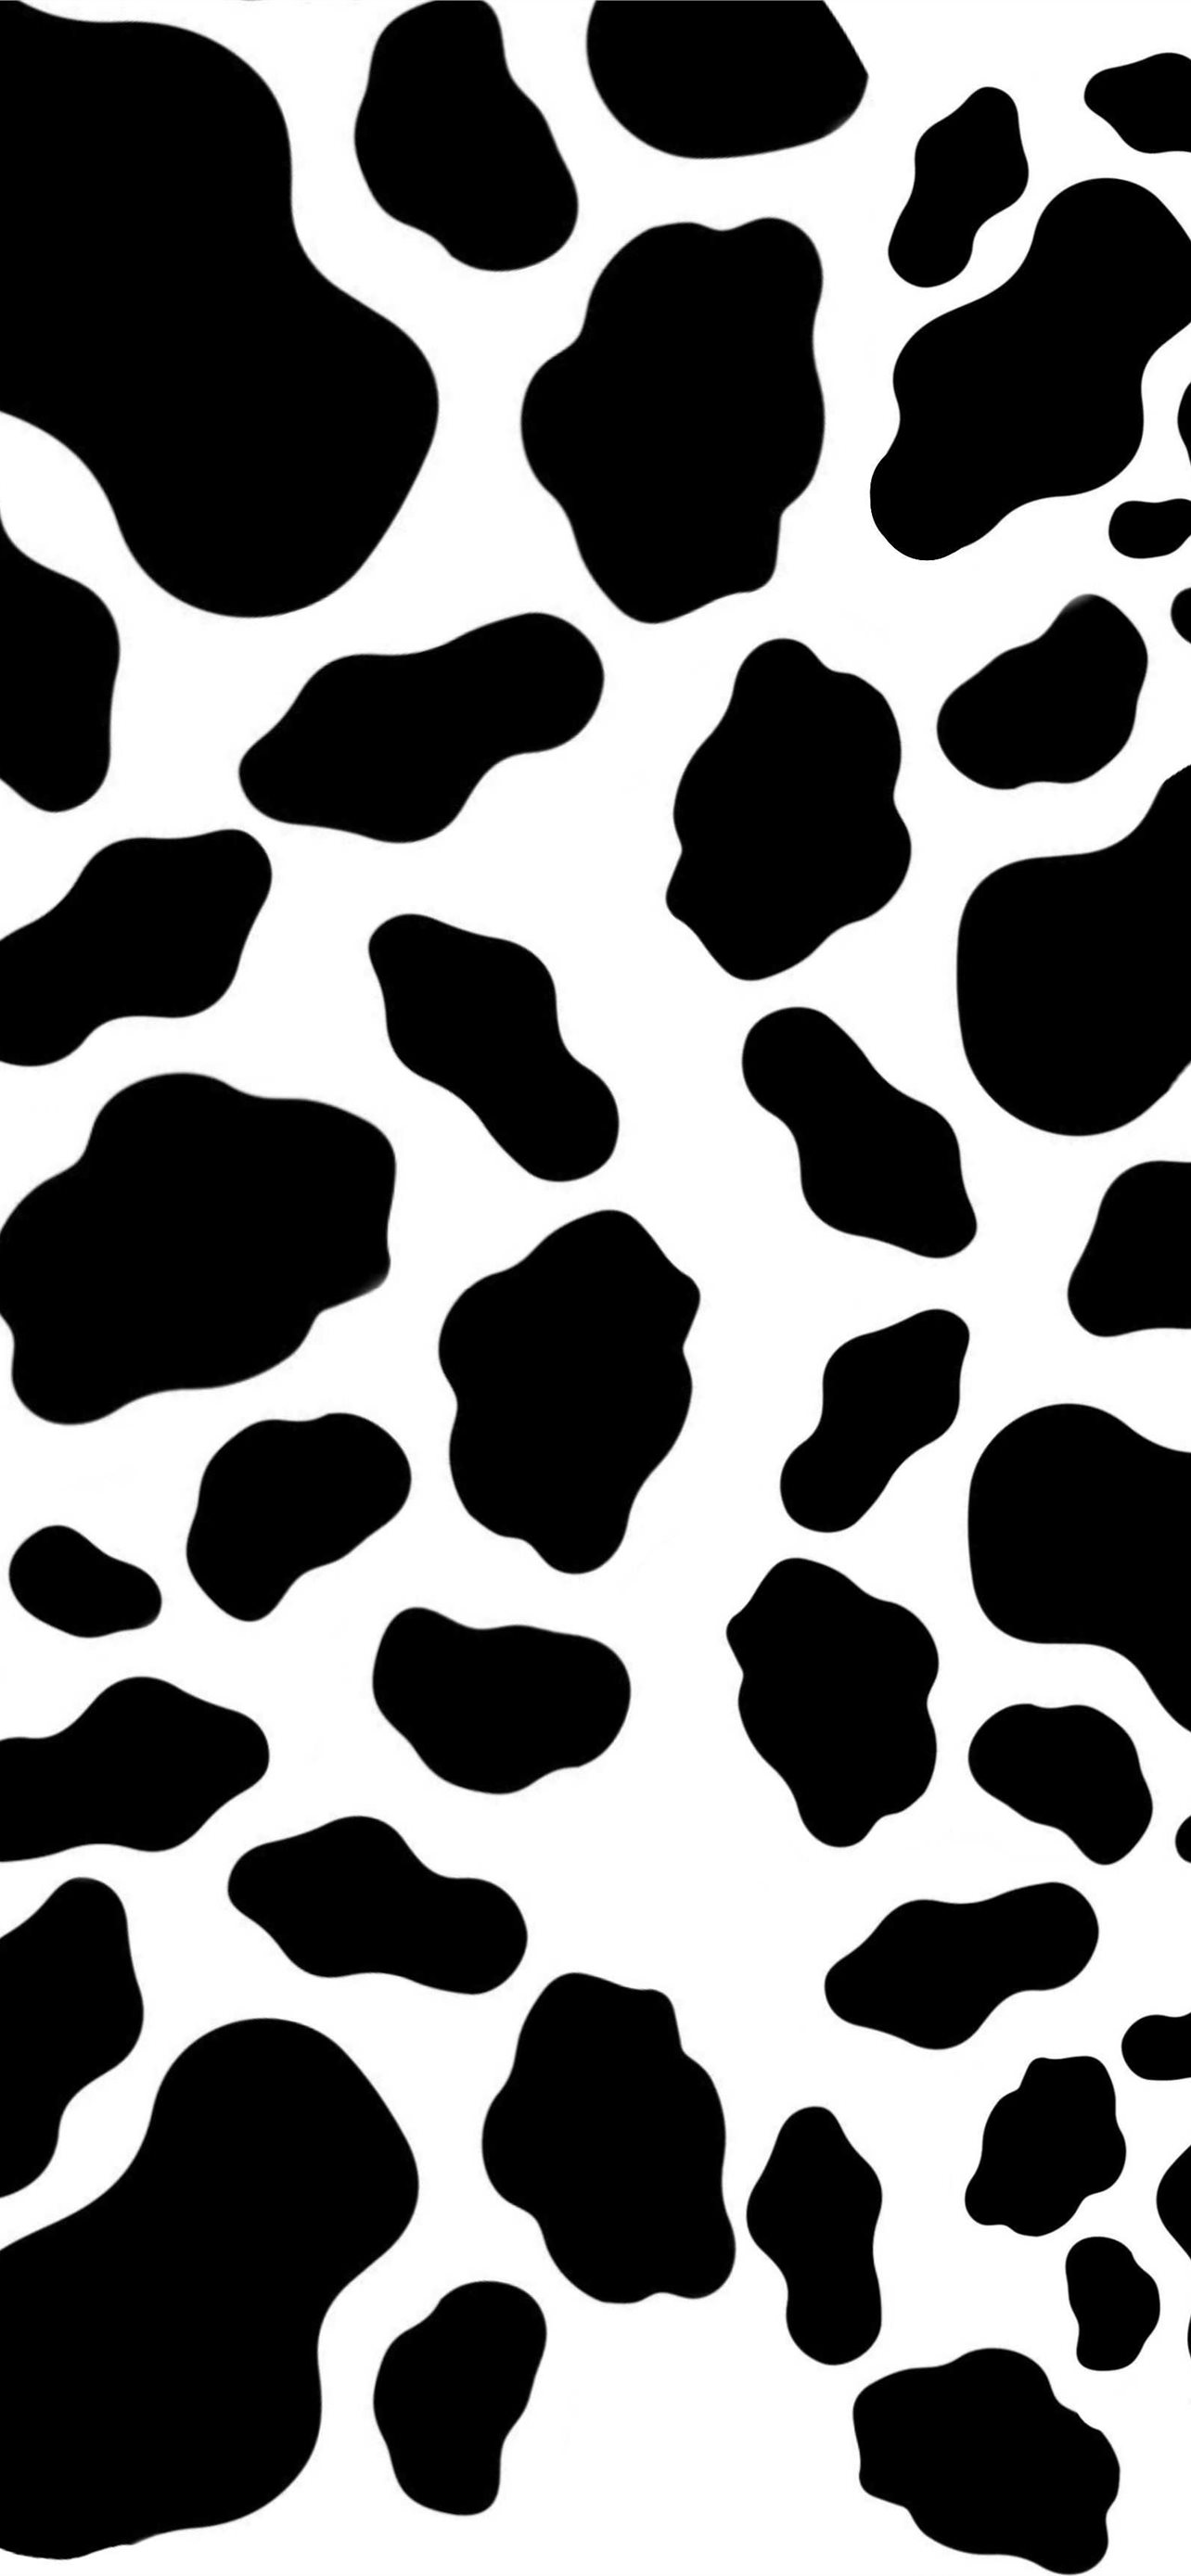 𝙼𝚊𝚍𝚎 𝙱𝚢 𝙼𝚊𝚍𝚒𝚜𝚘𝚗  Cow print wallpaper Cow wallpaper Cute  patterns wallpaper